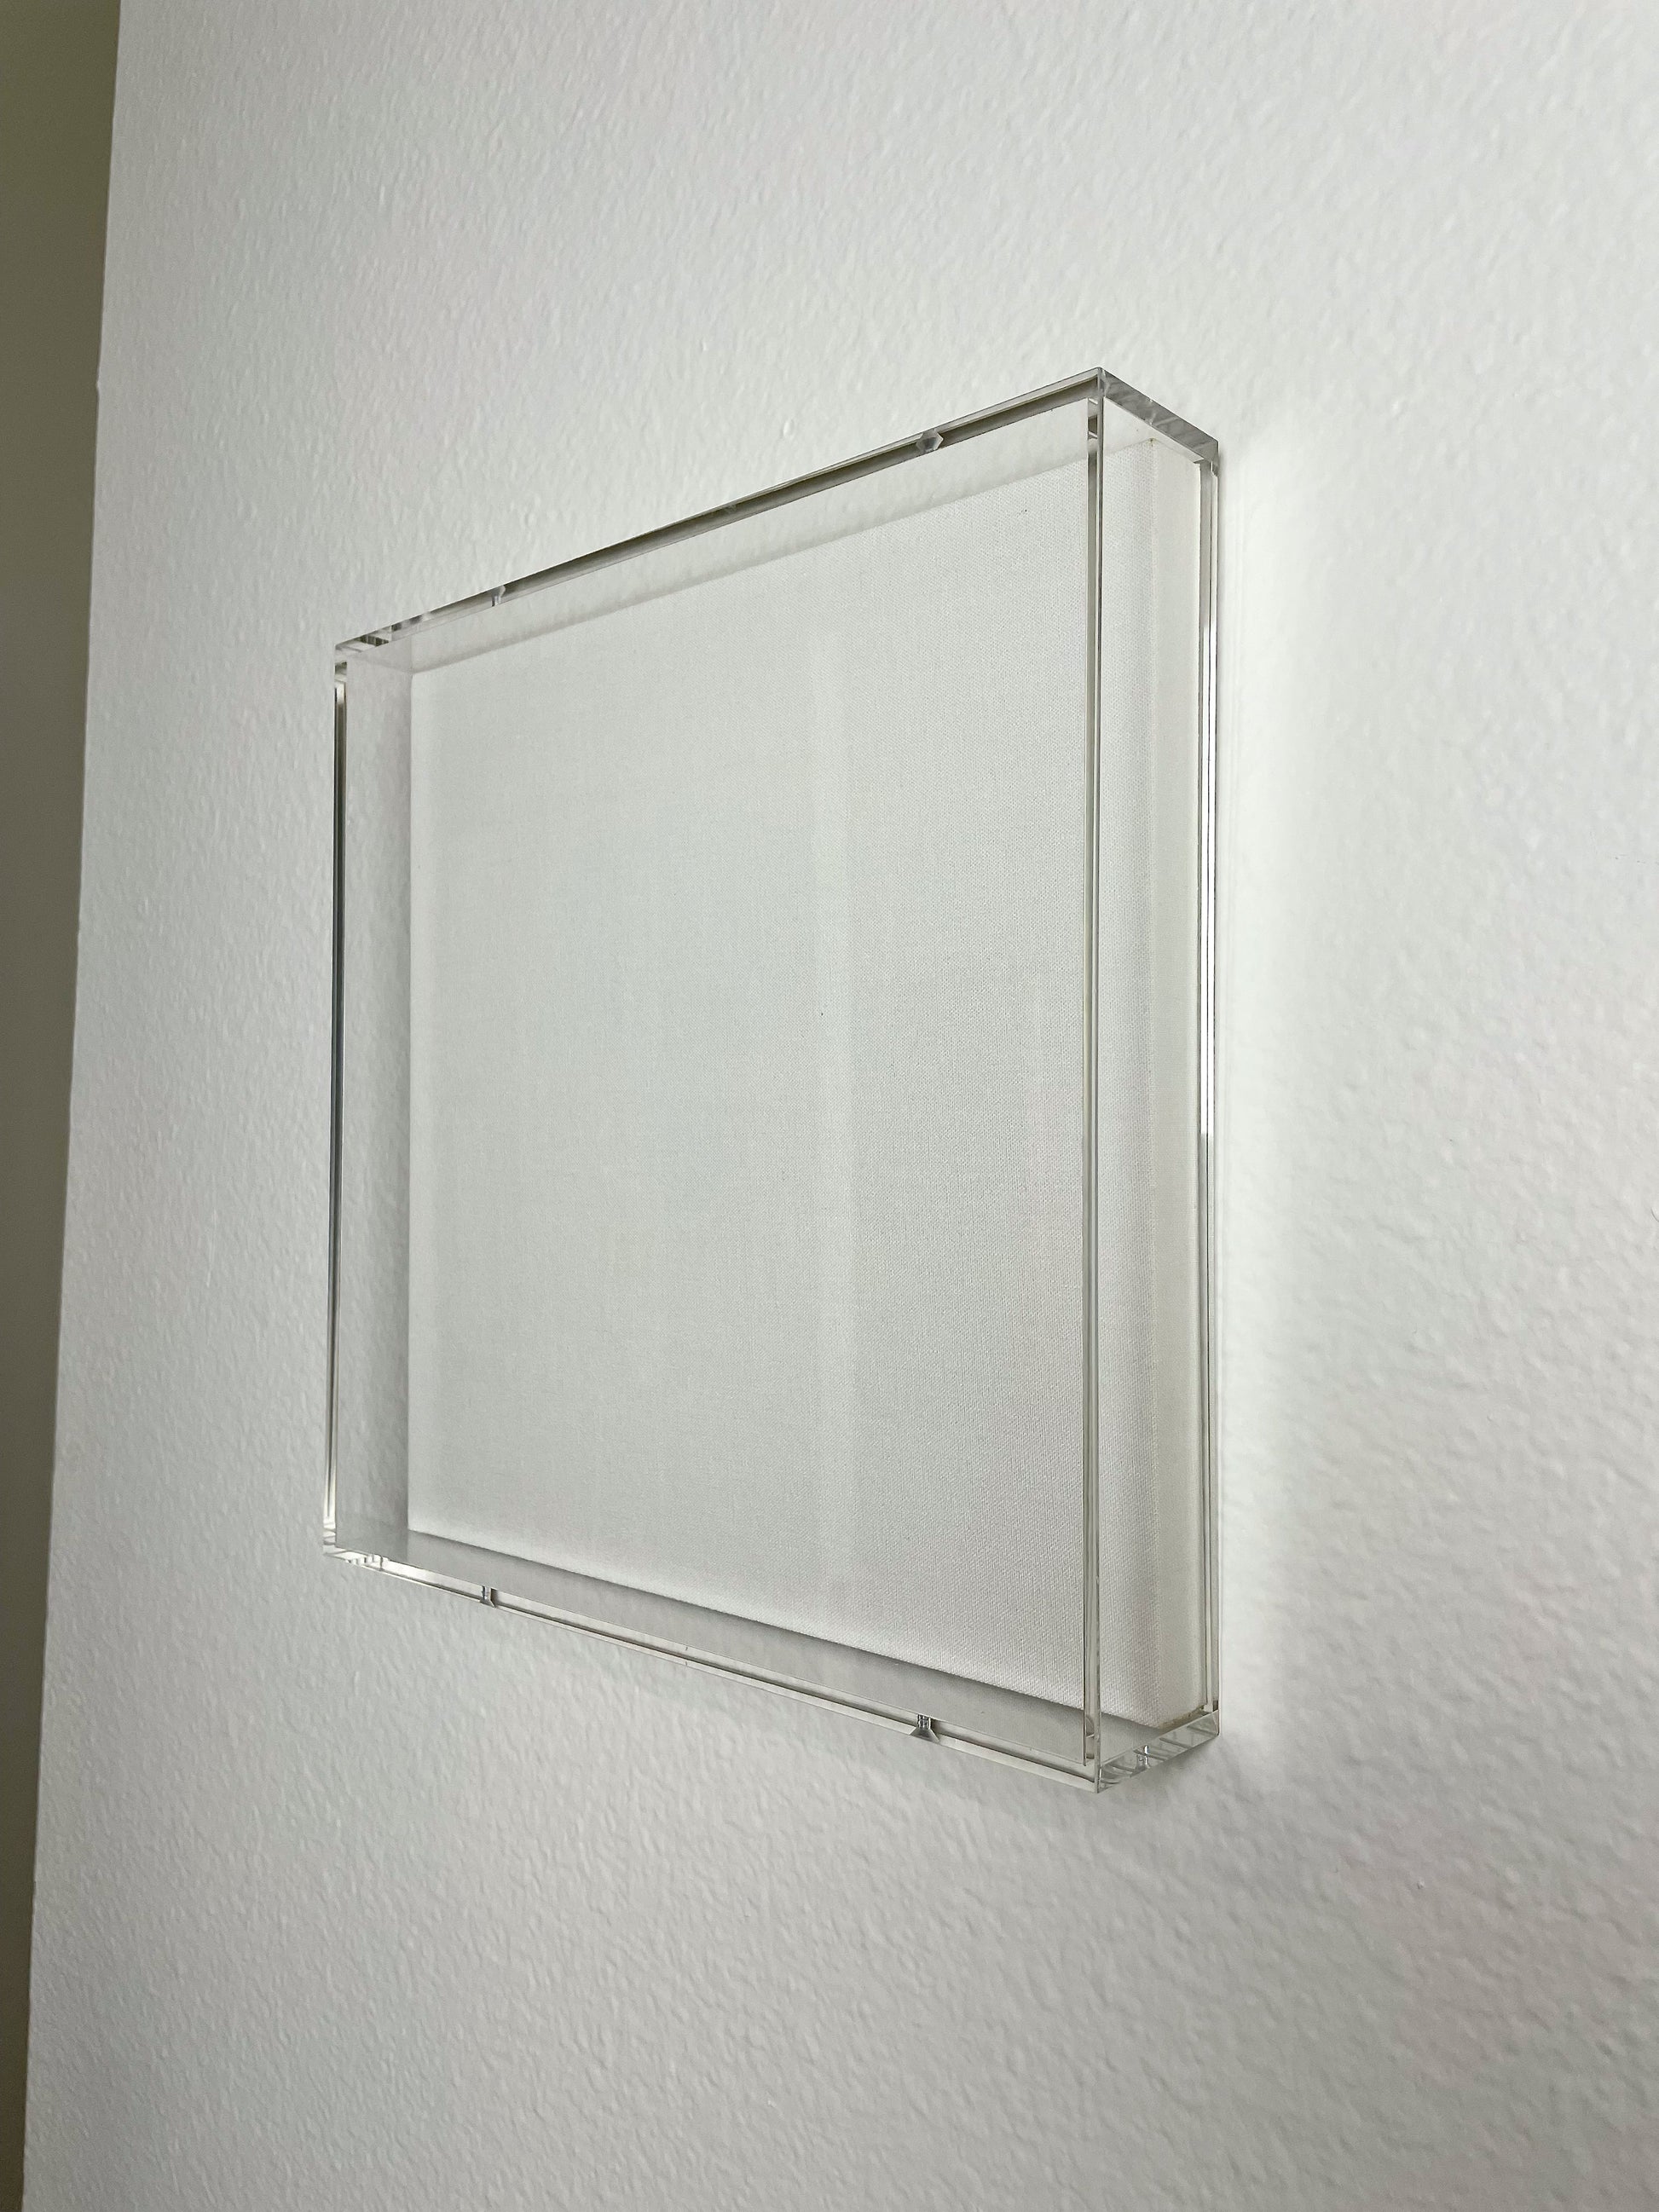 Case of 3, 20x20 Acrylic Box Frames